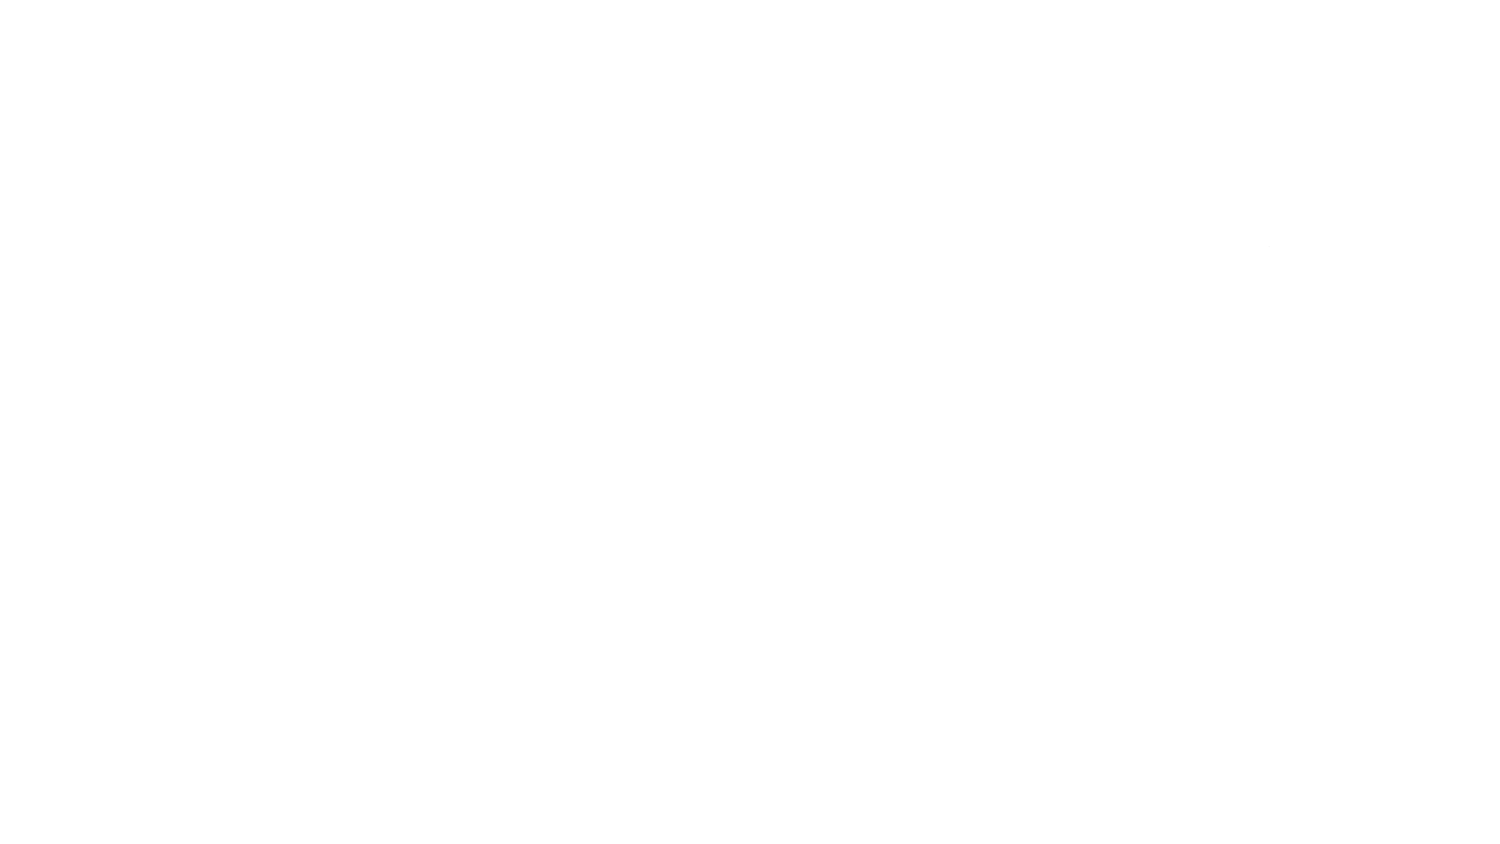 Mission Chattanooga